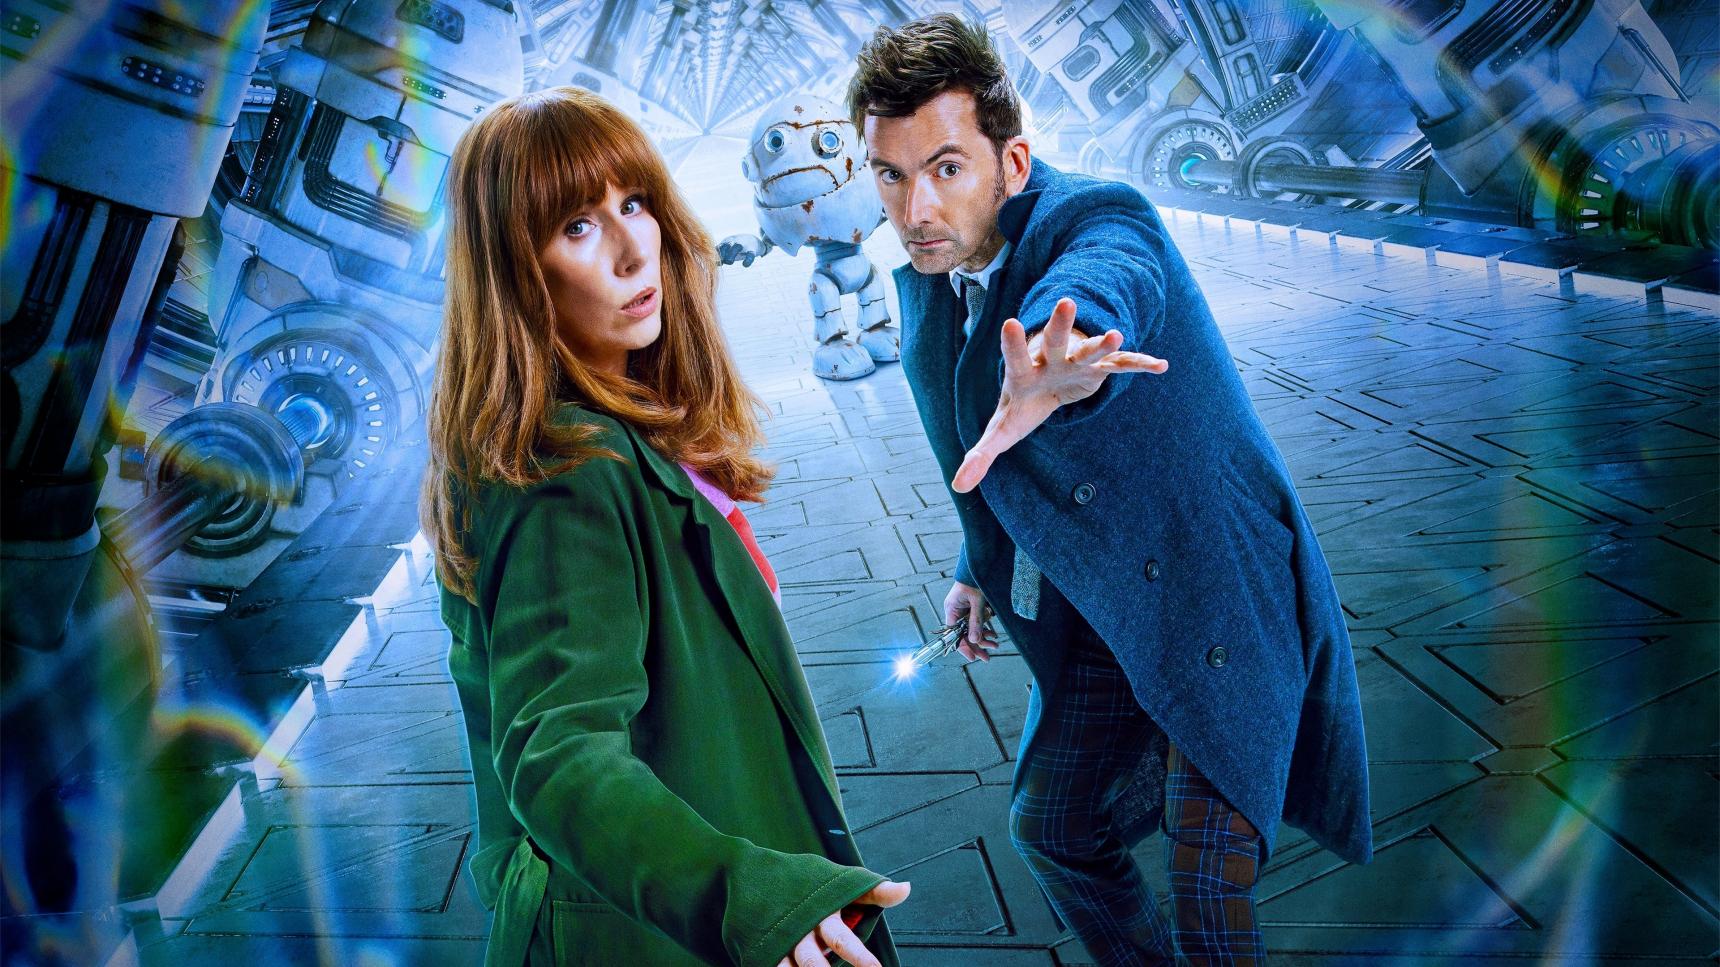 Poster del episodio 2 de Doctor Who online